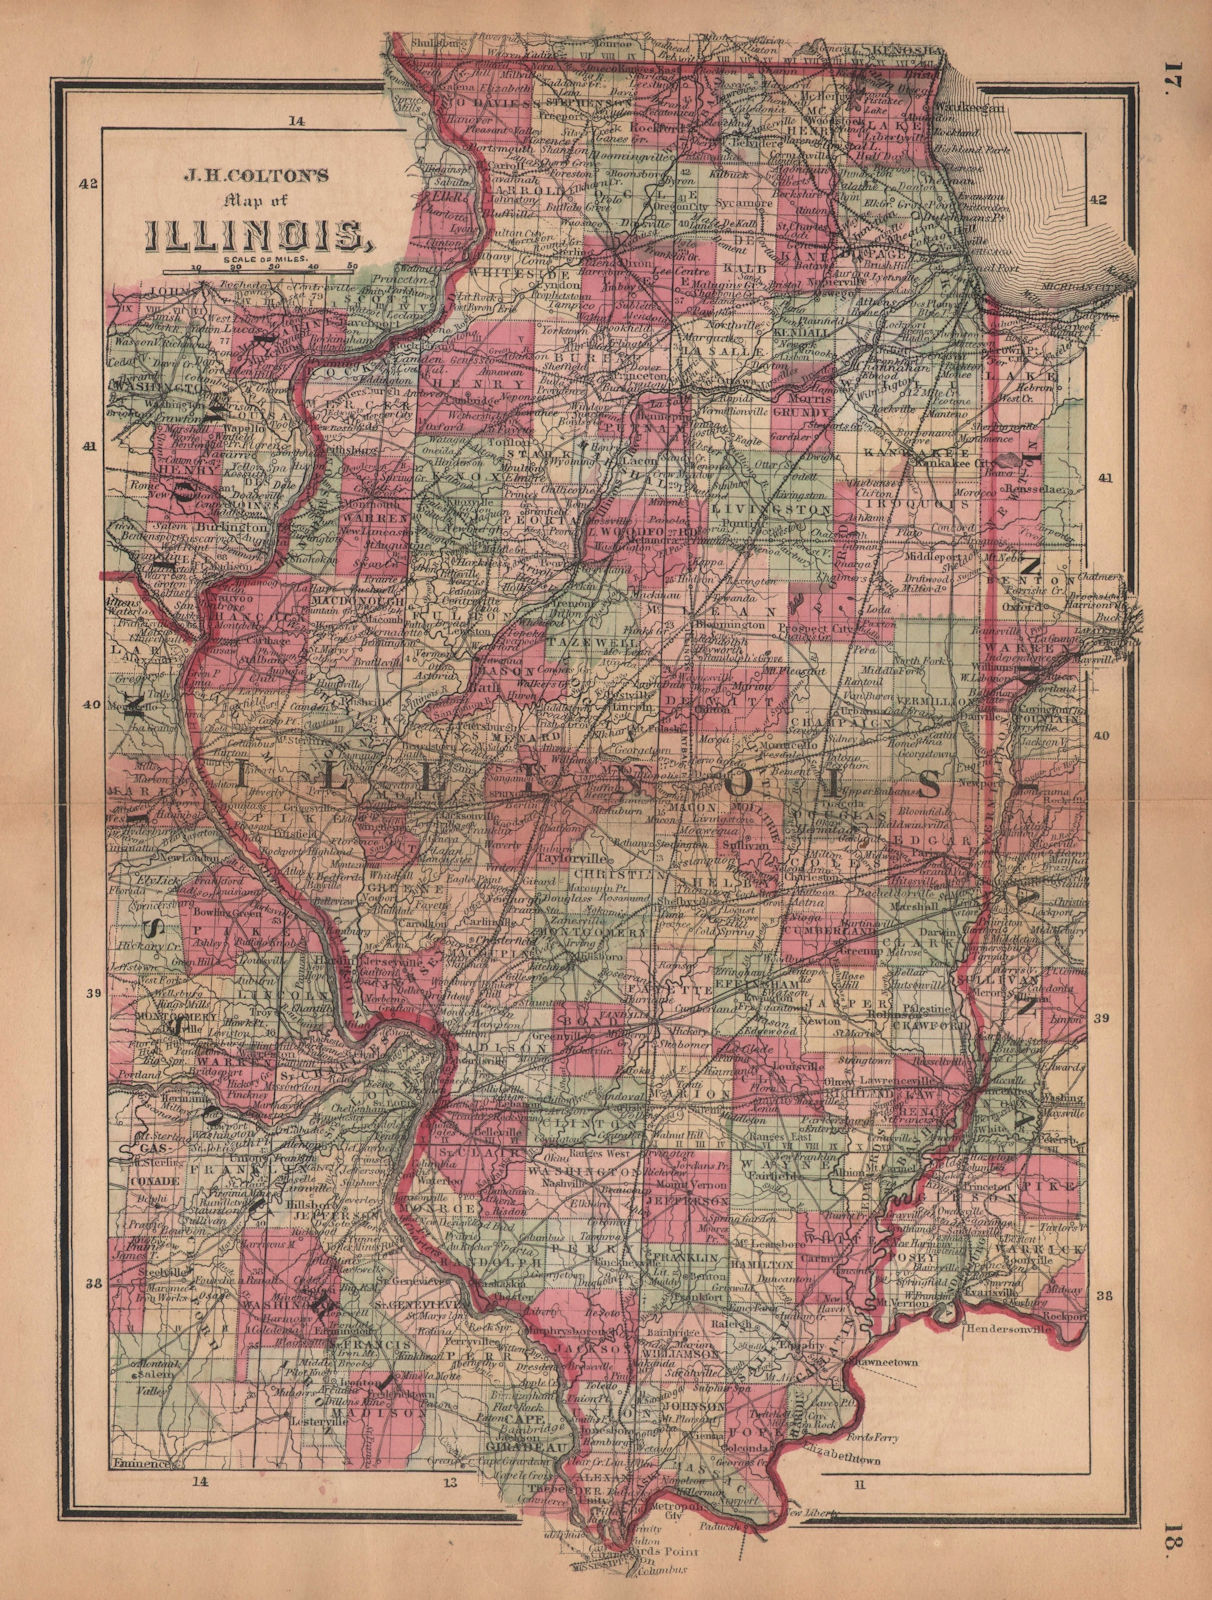 Associate Product J. H. Colton's map of Illinois 1864 old antique vintage plan chart